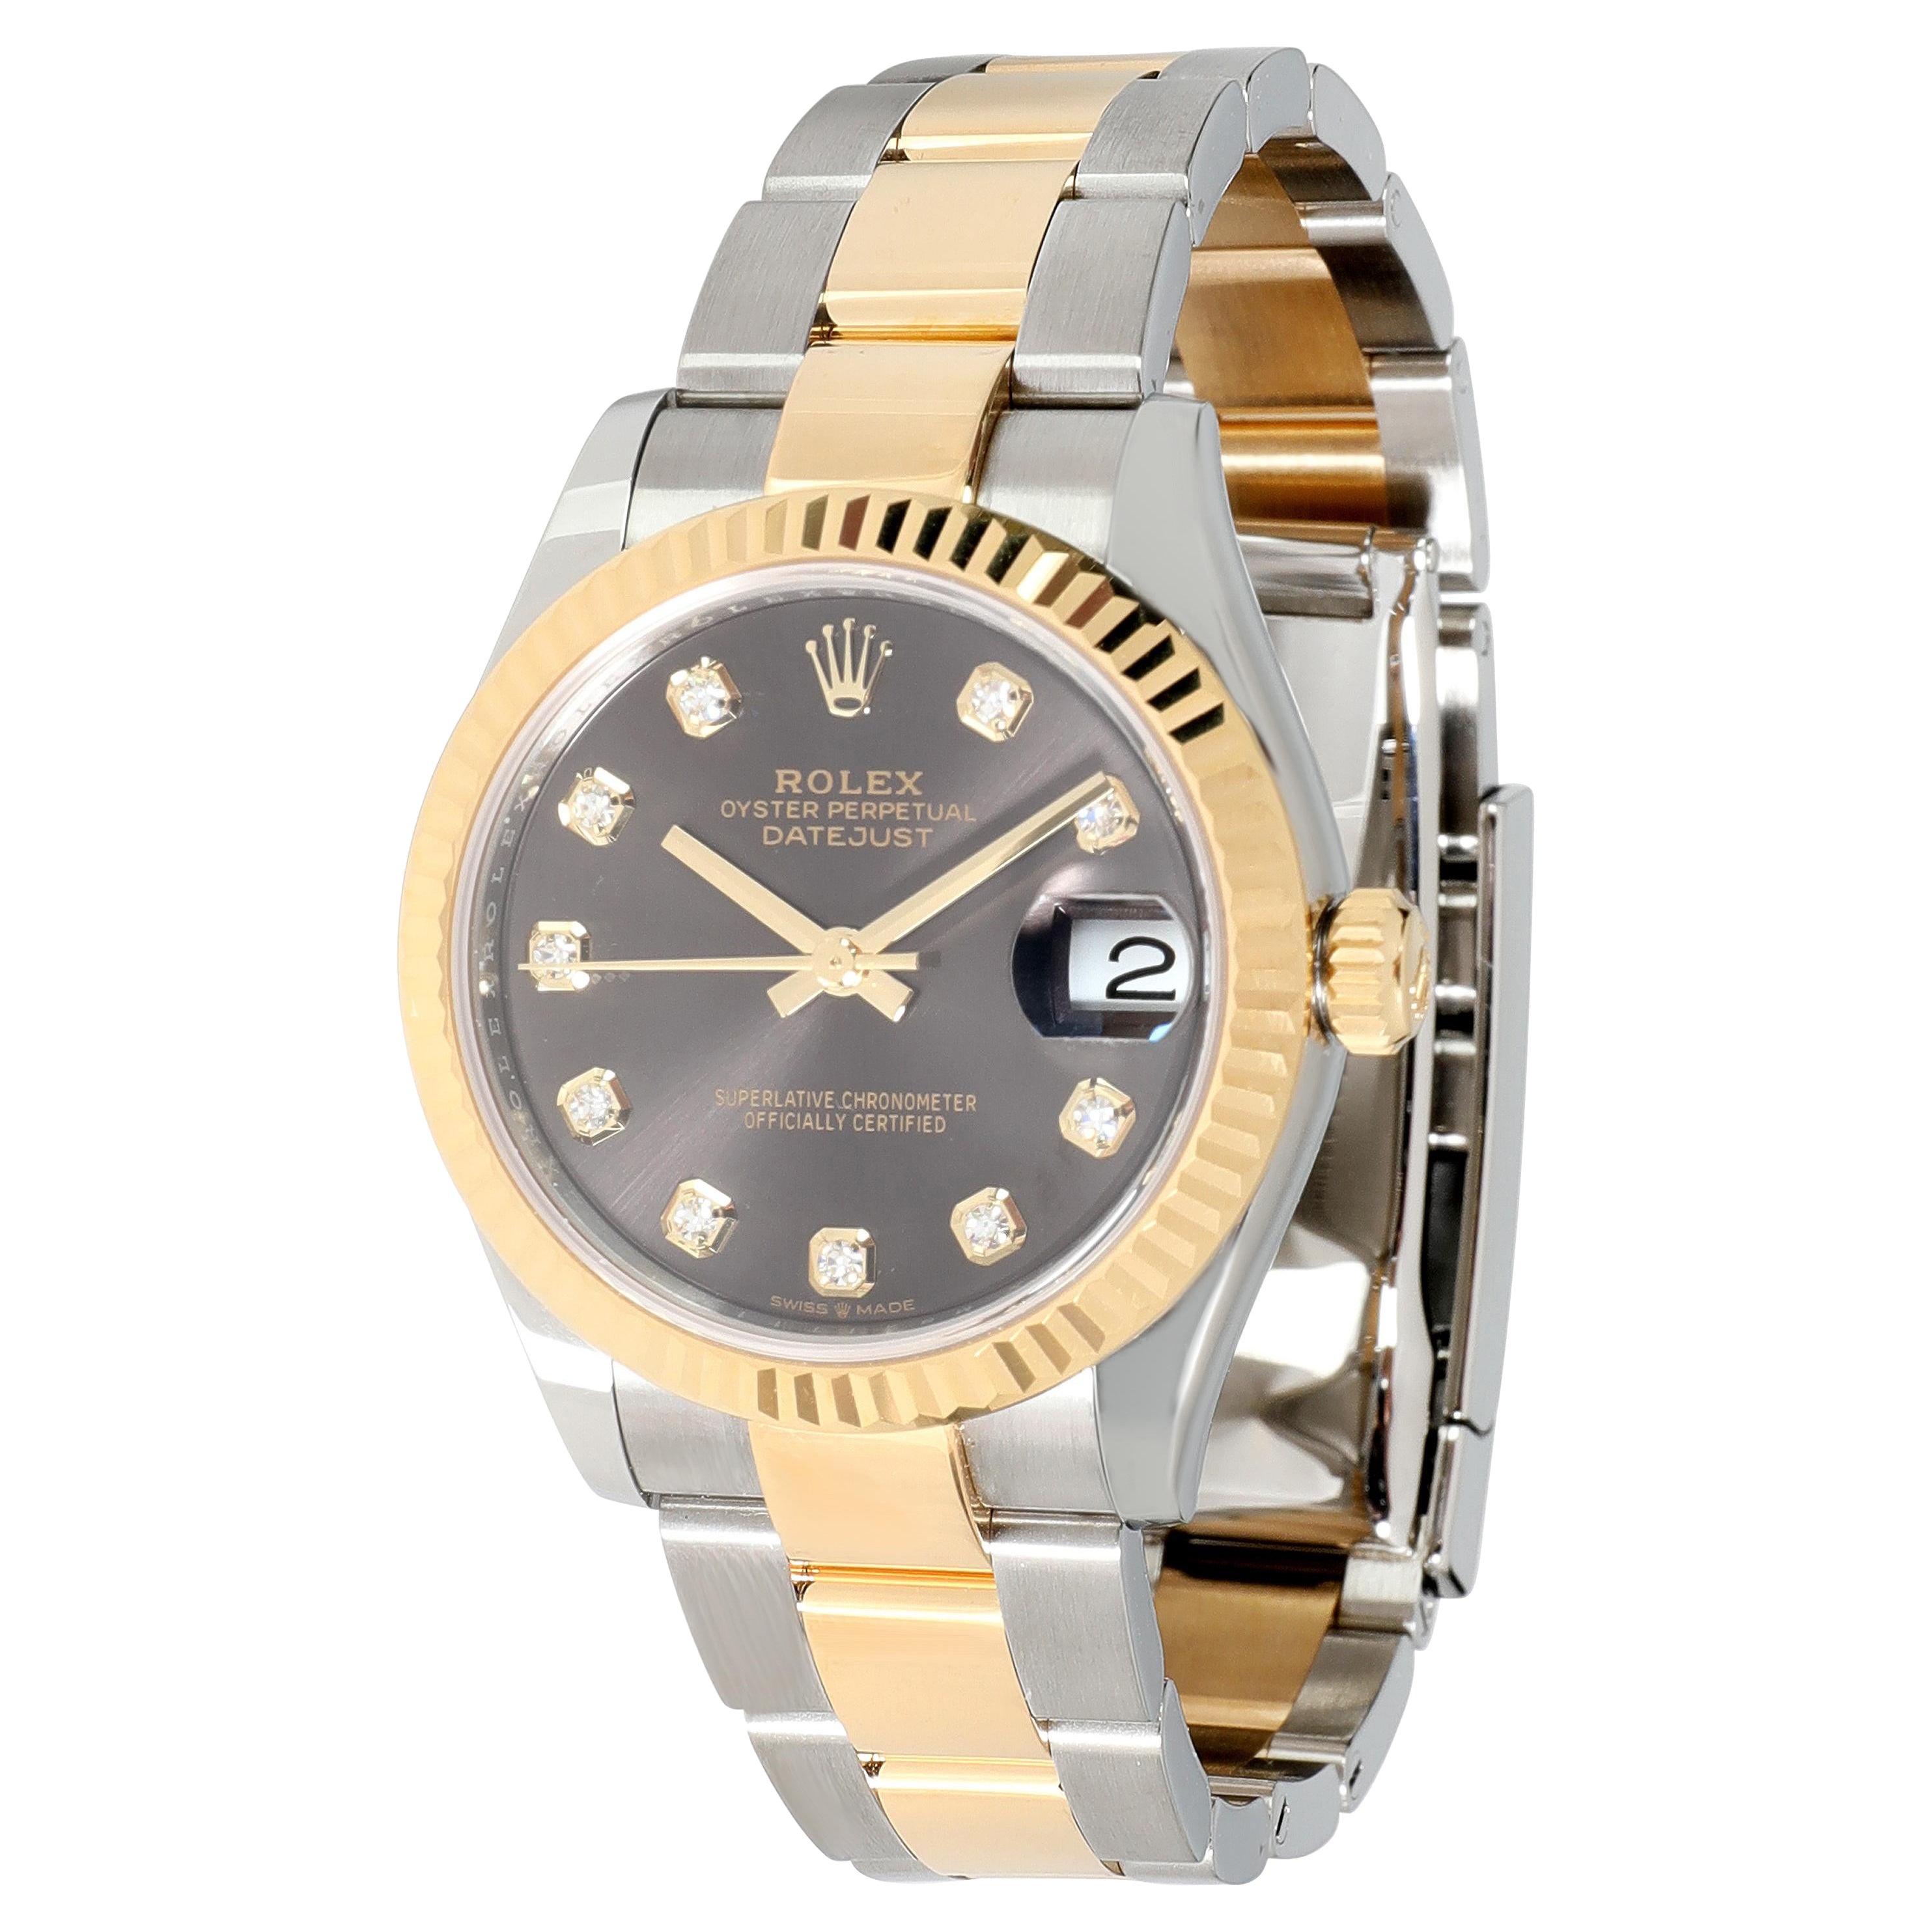 Rolex Datejust 278273 Unisex Watch in 18kt Stainless Steel/Yellow Gold